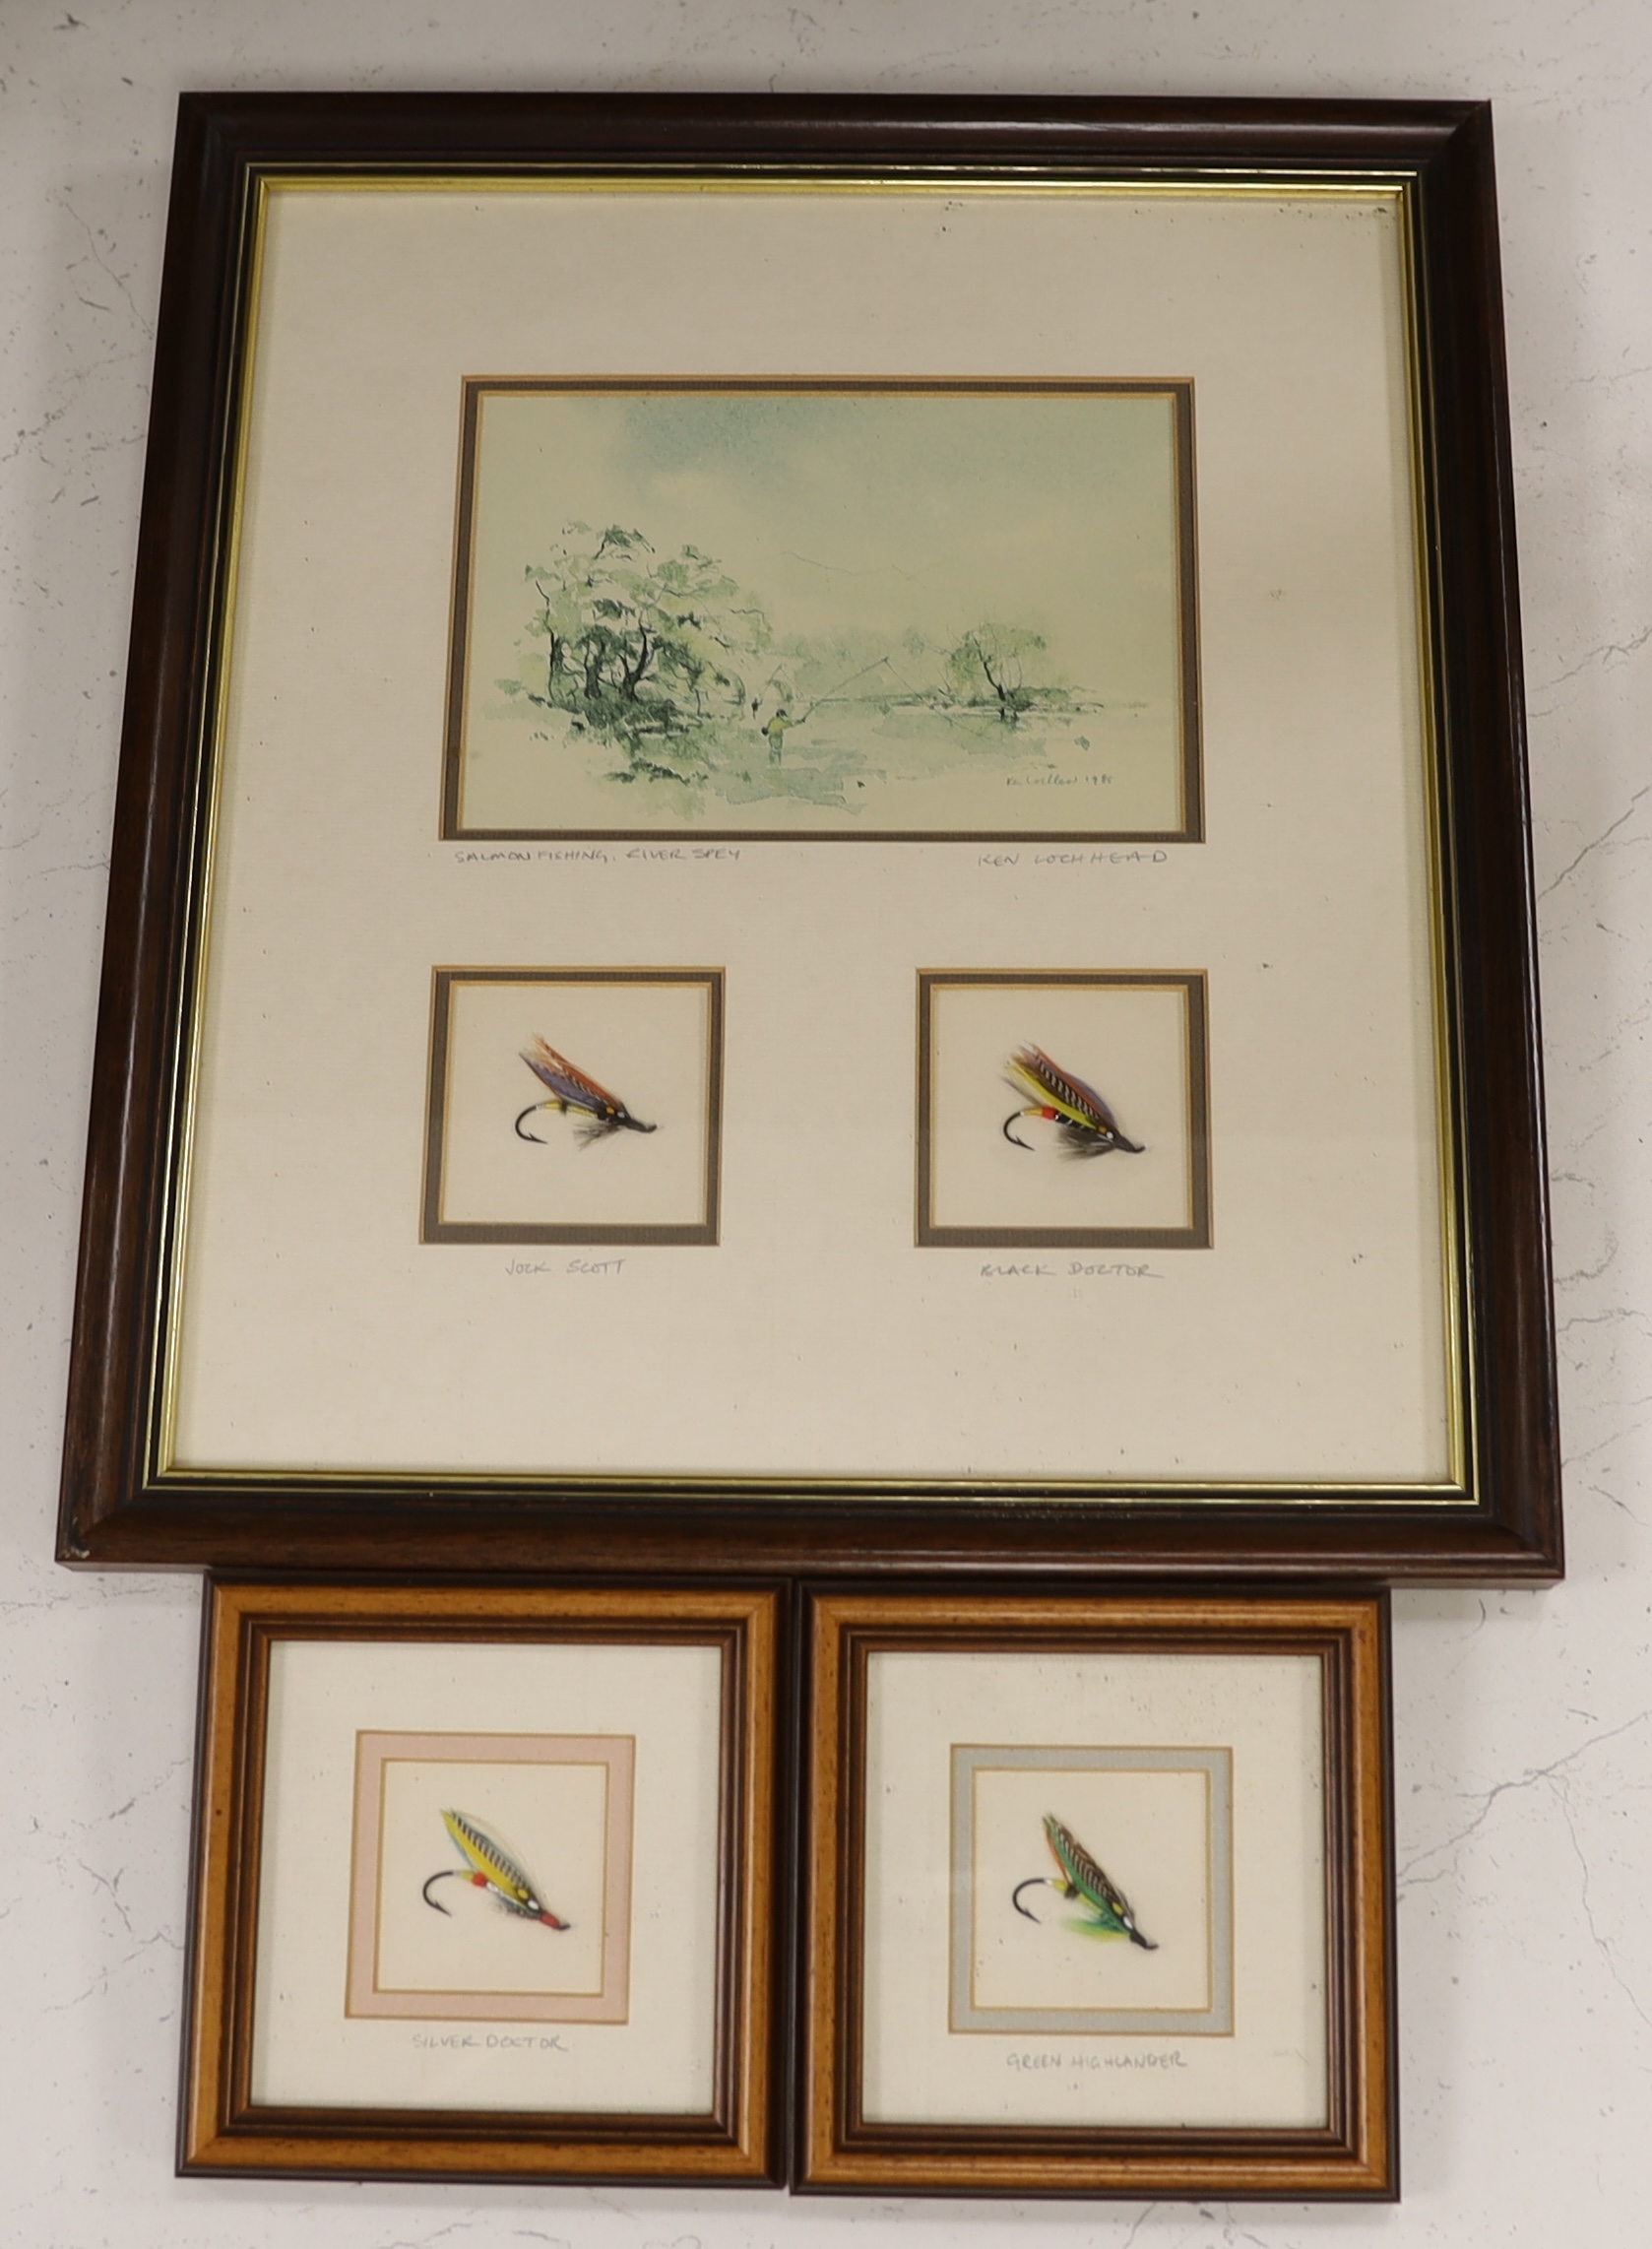 Ken Lockhead, print, Salmon Fishing, River Spey, framed with fishing flies